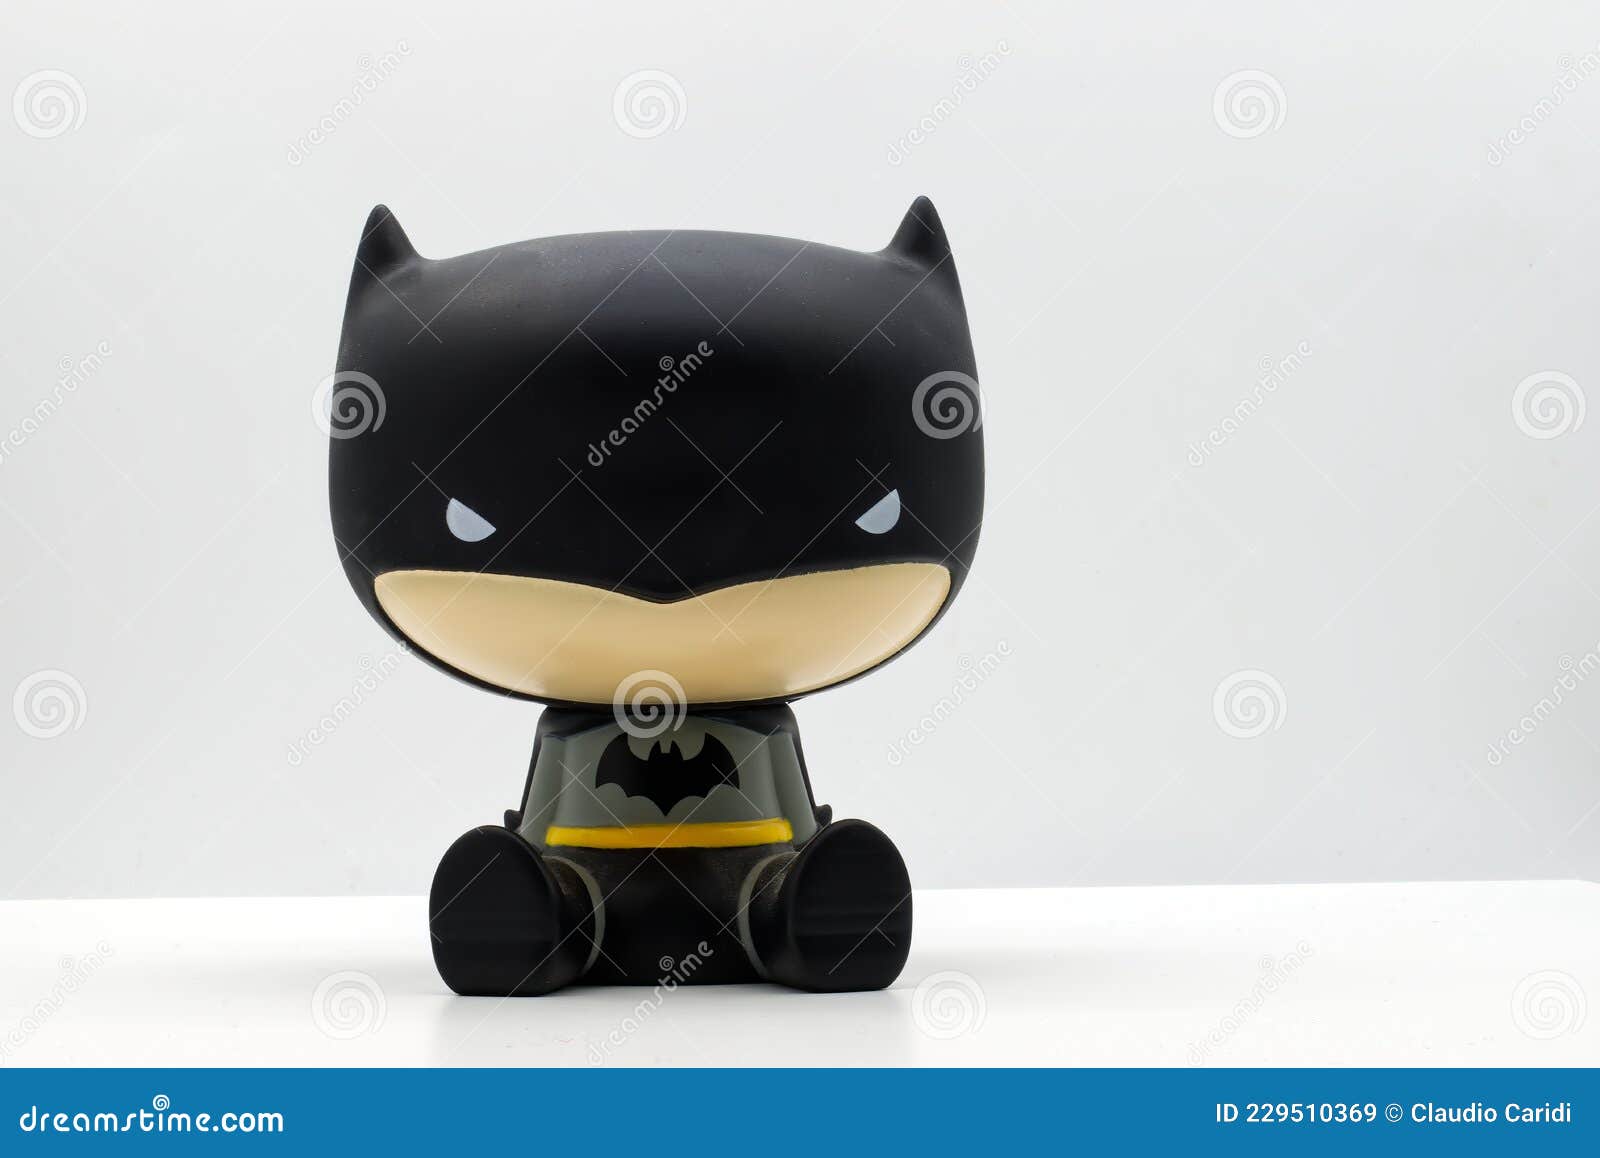 Batman Signal Stock Photos - Free & Royalty-Free Stock Photos from